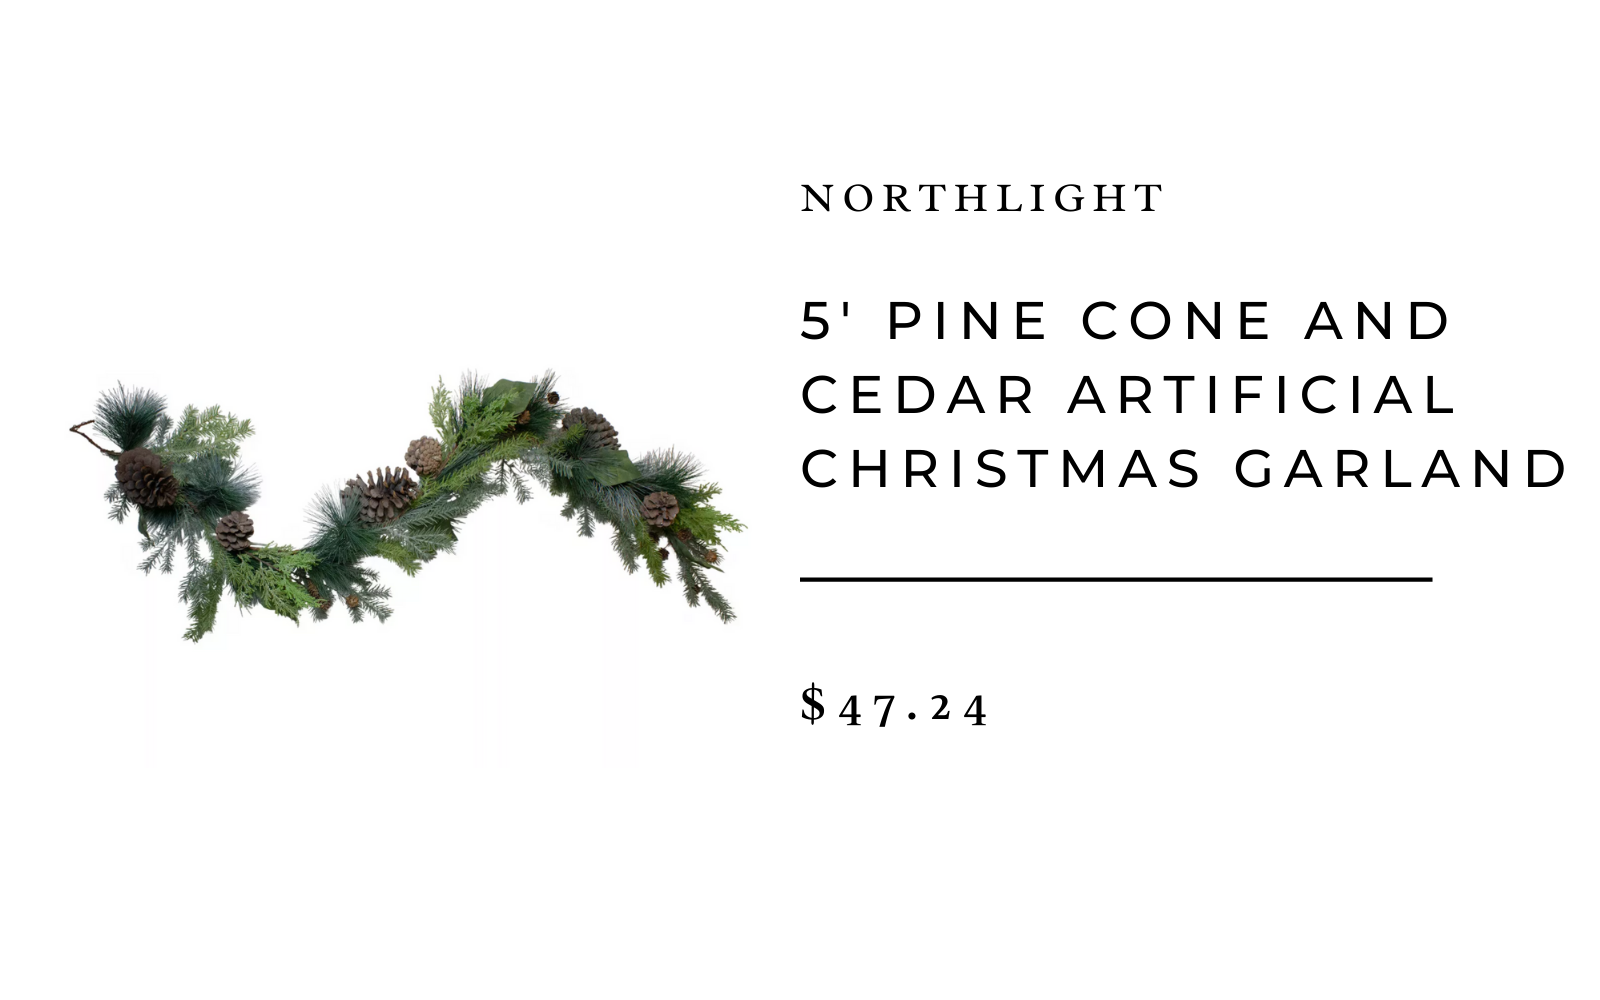 Pin Cone and Cedar Christmas Garland